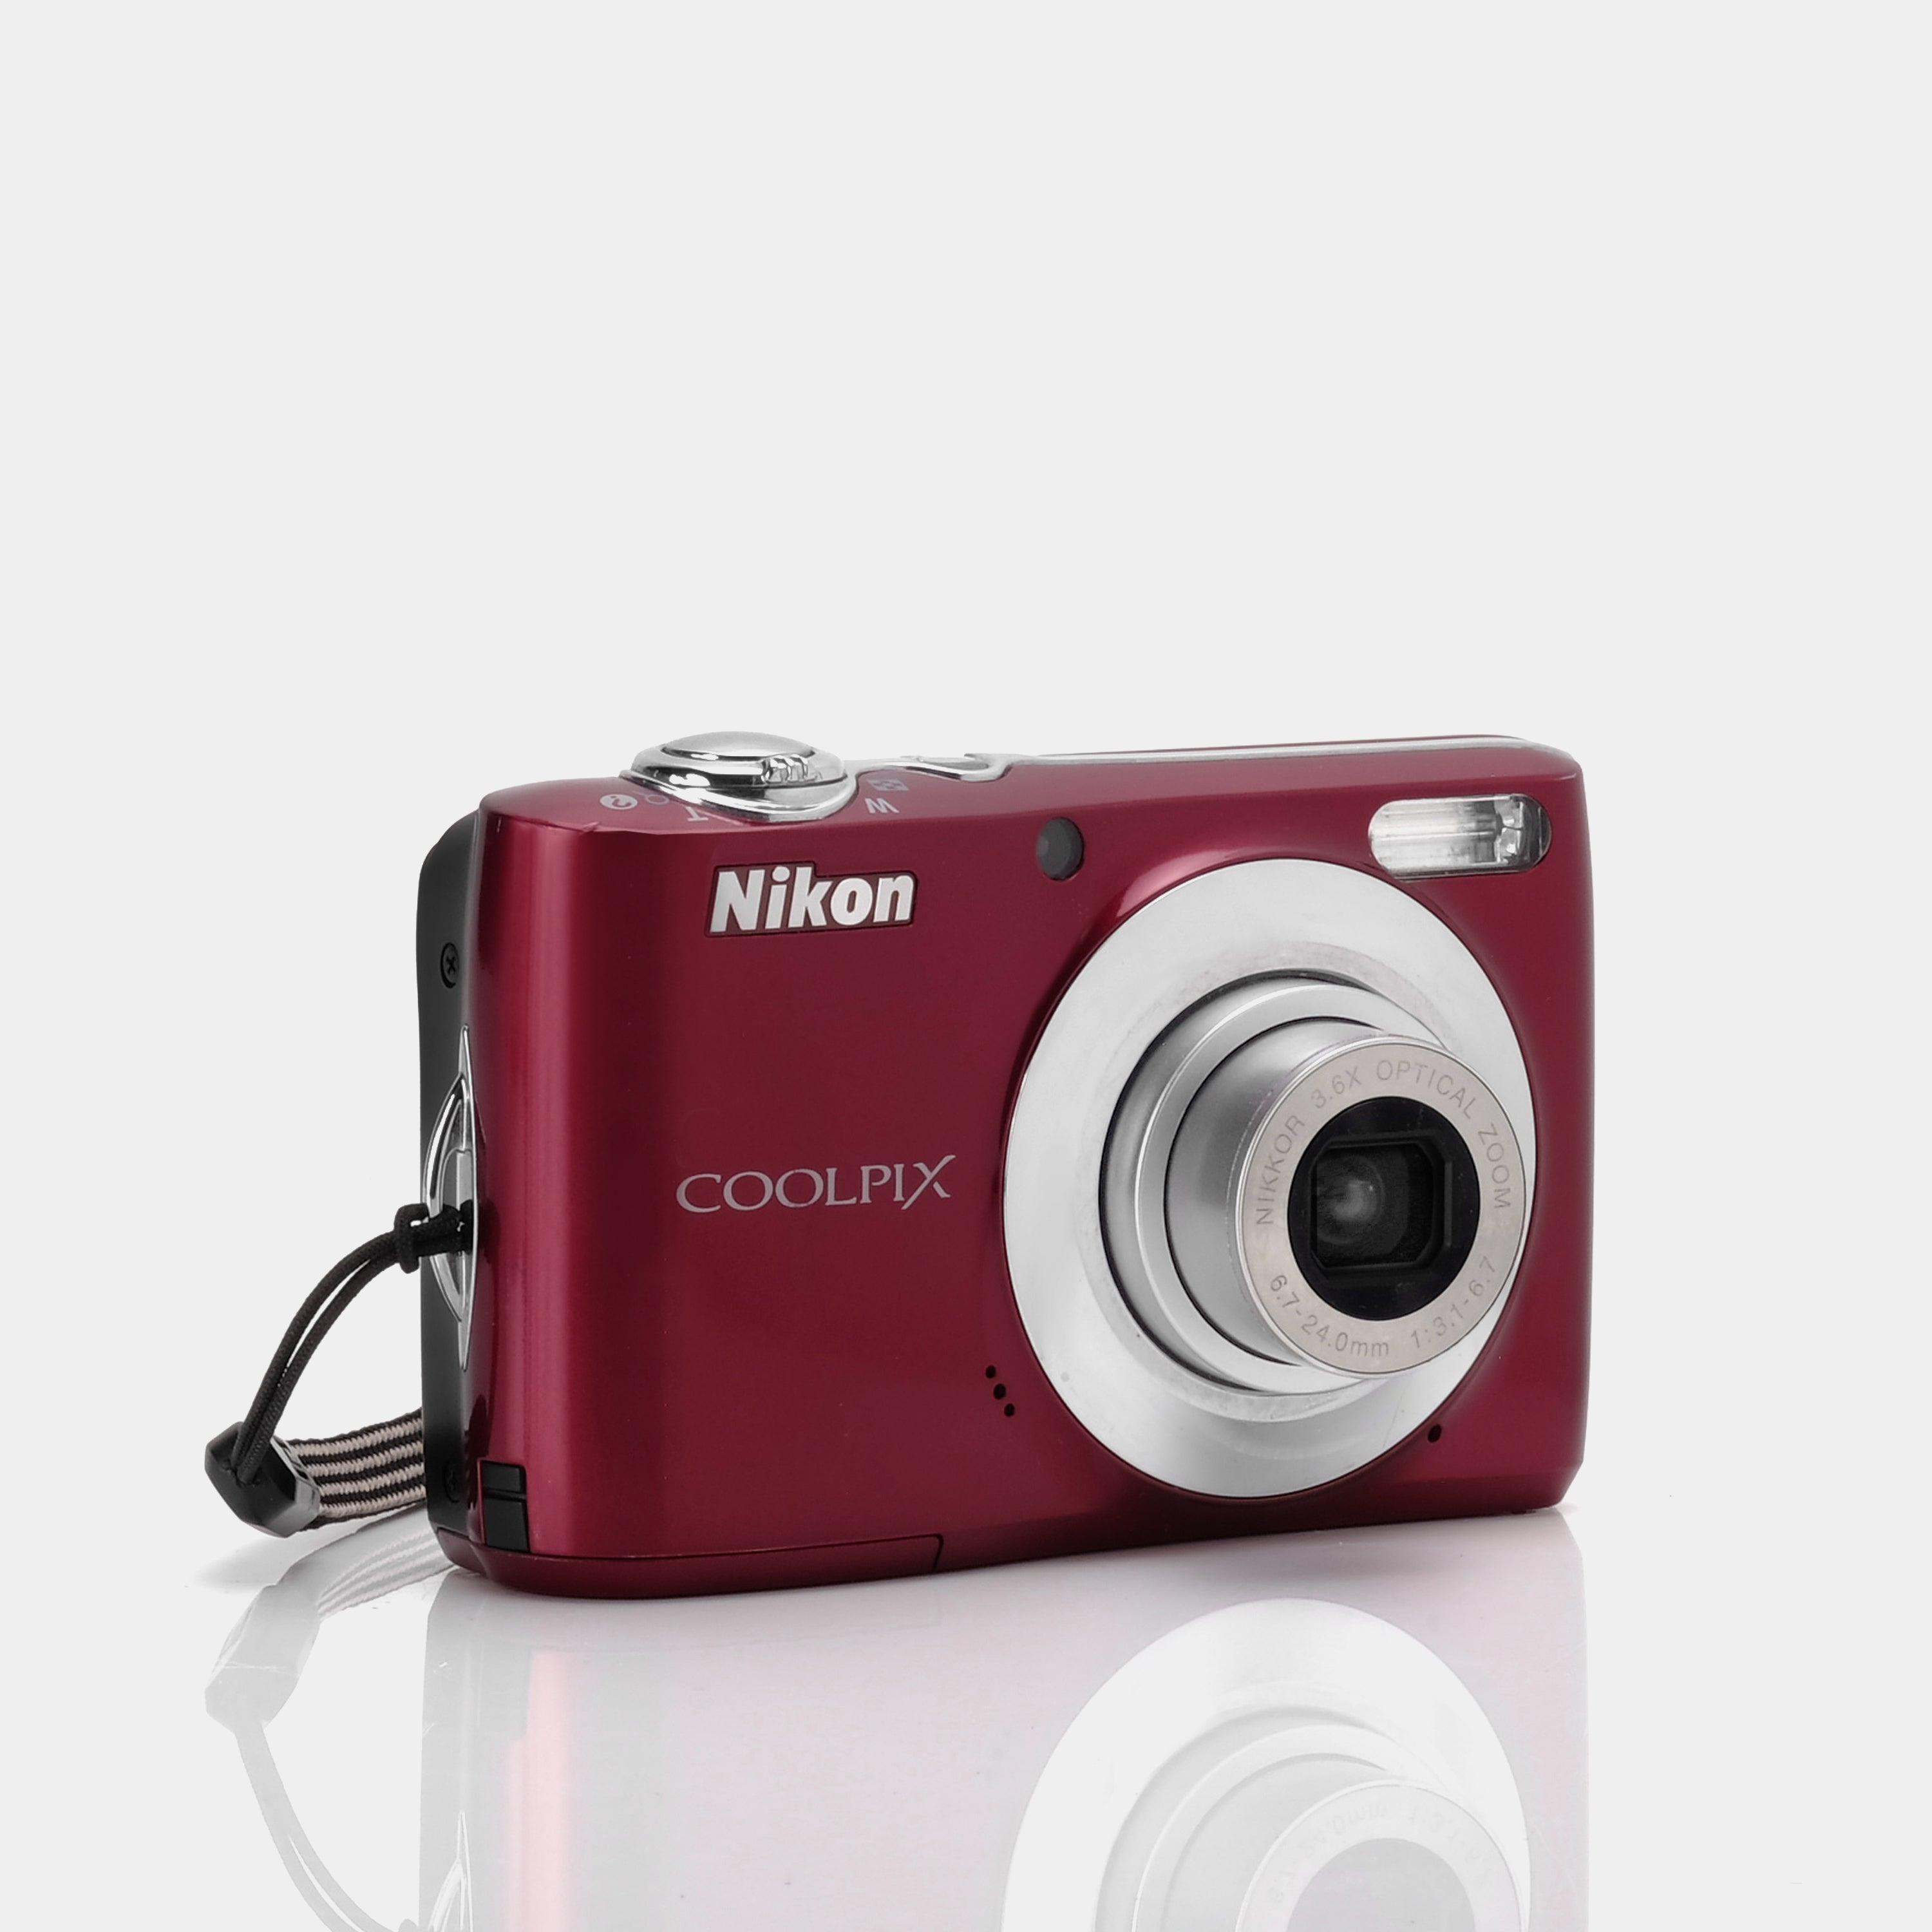 Nikon Coolpix L22 Maroon Point and Shoot Digital Camera